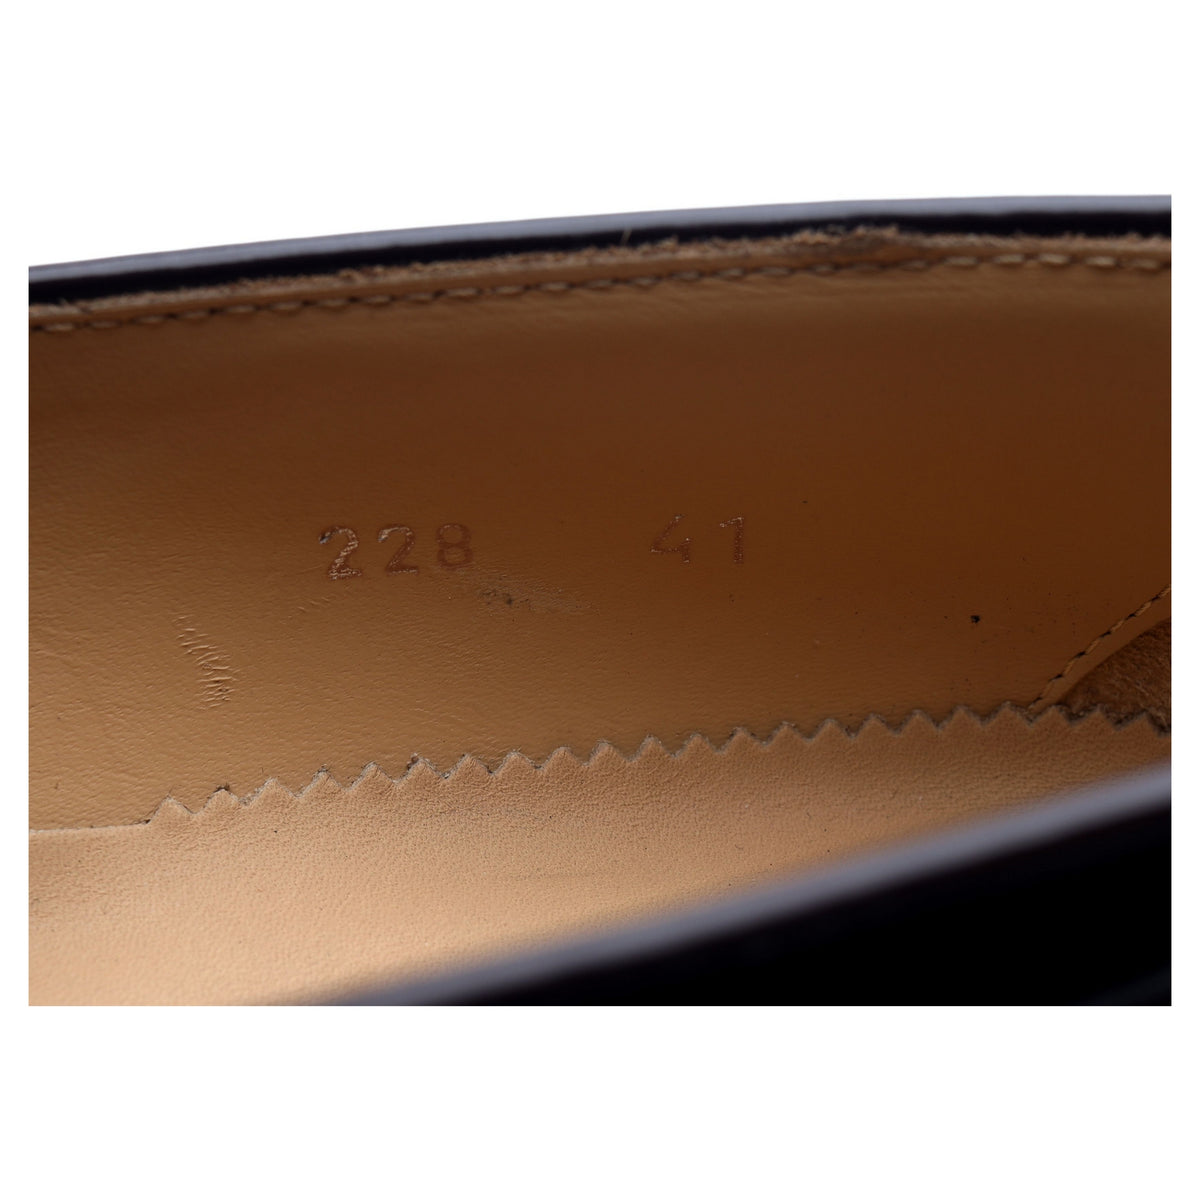 Sneakers Louis Vuitton Louis Vuitton Luxembourg Brown Monogram Leather EU 42 UK 8